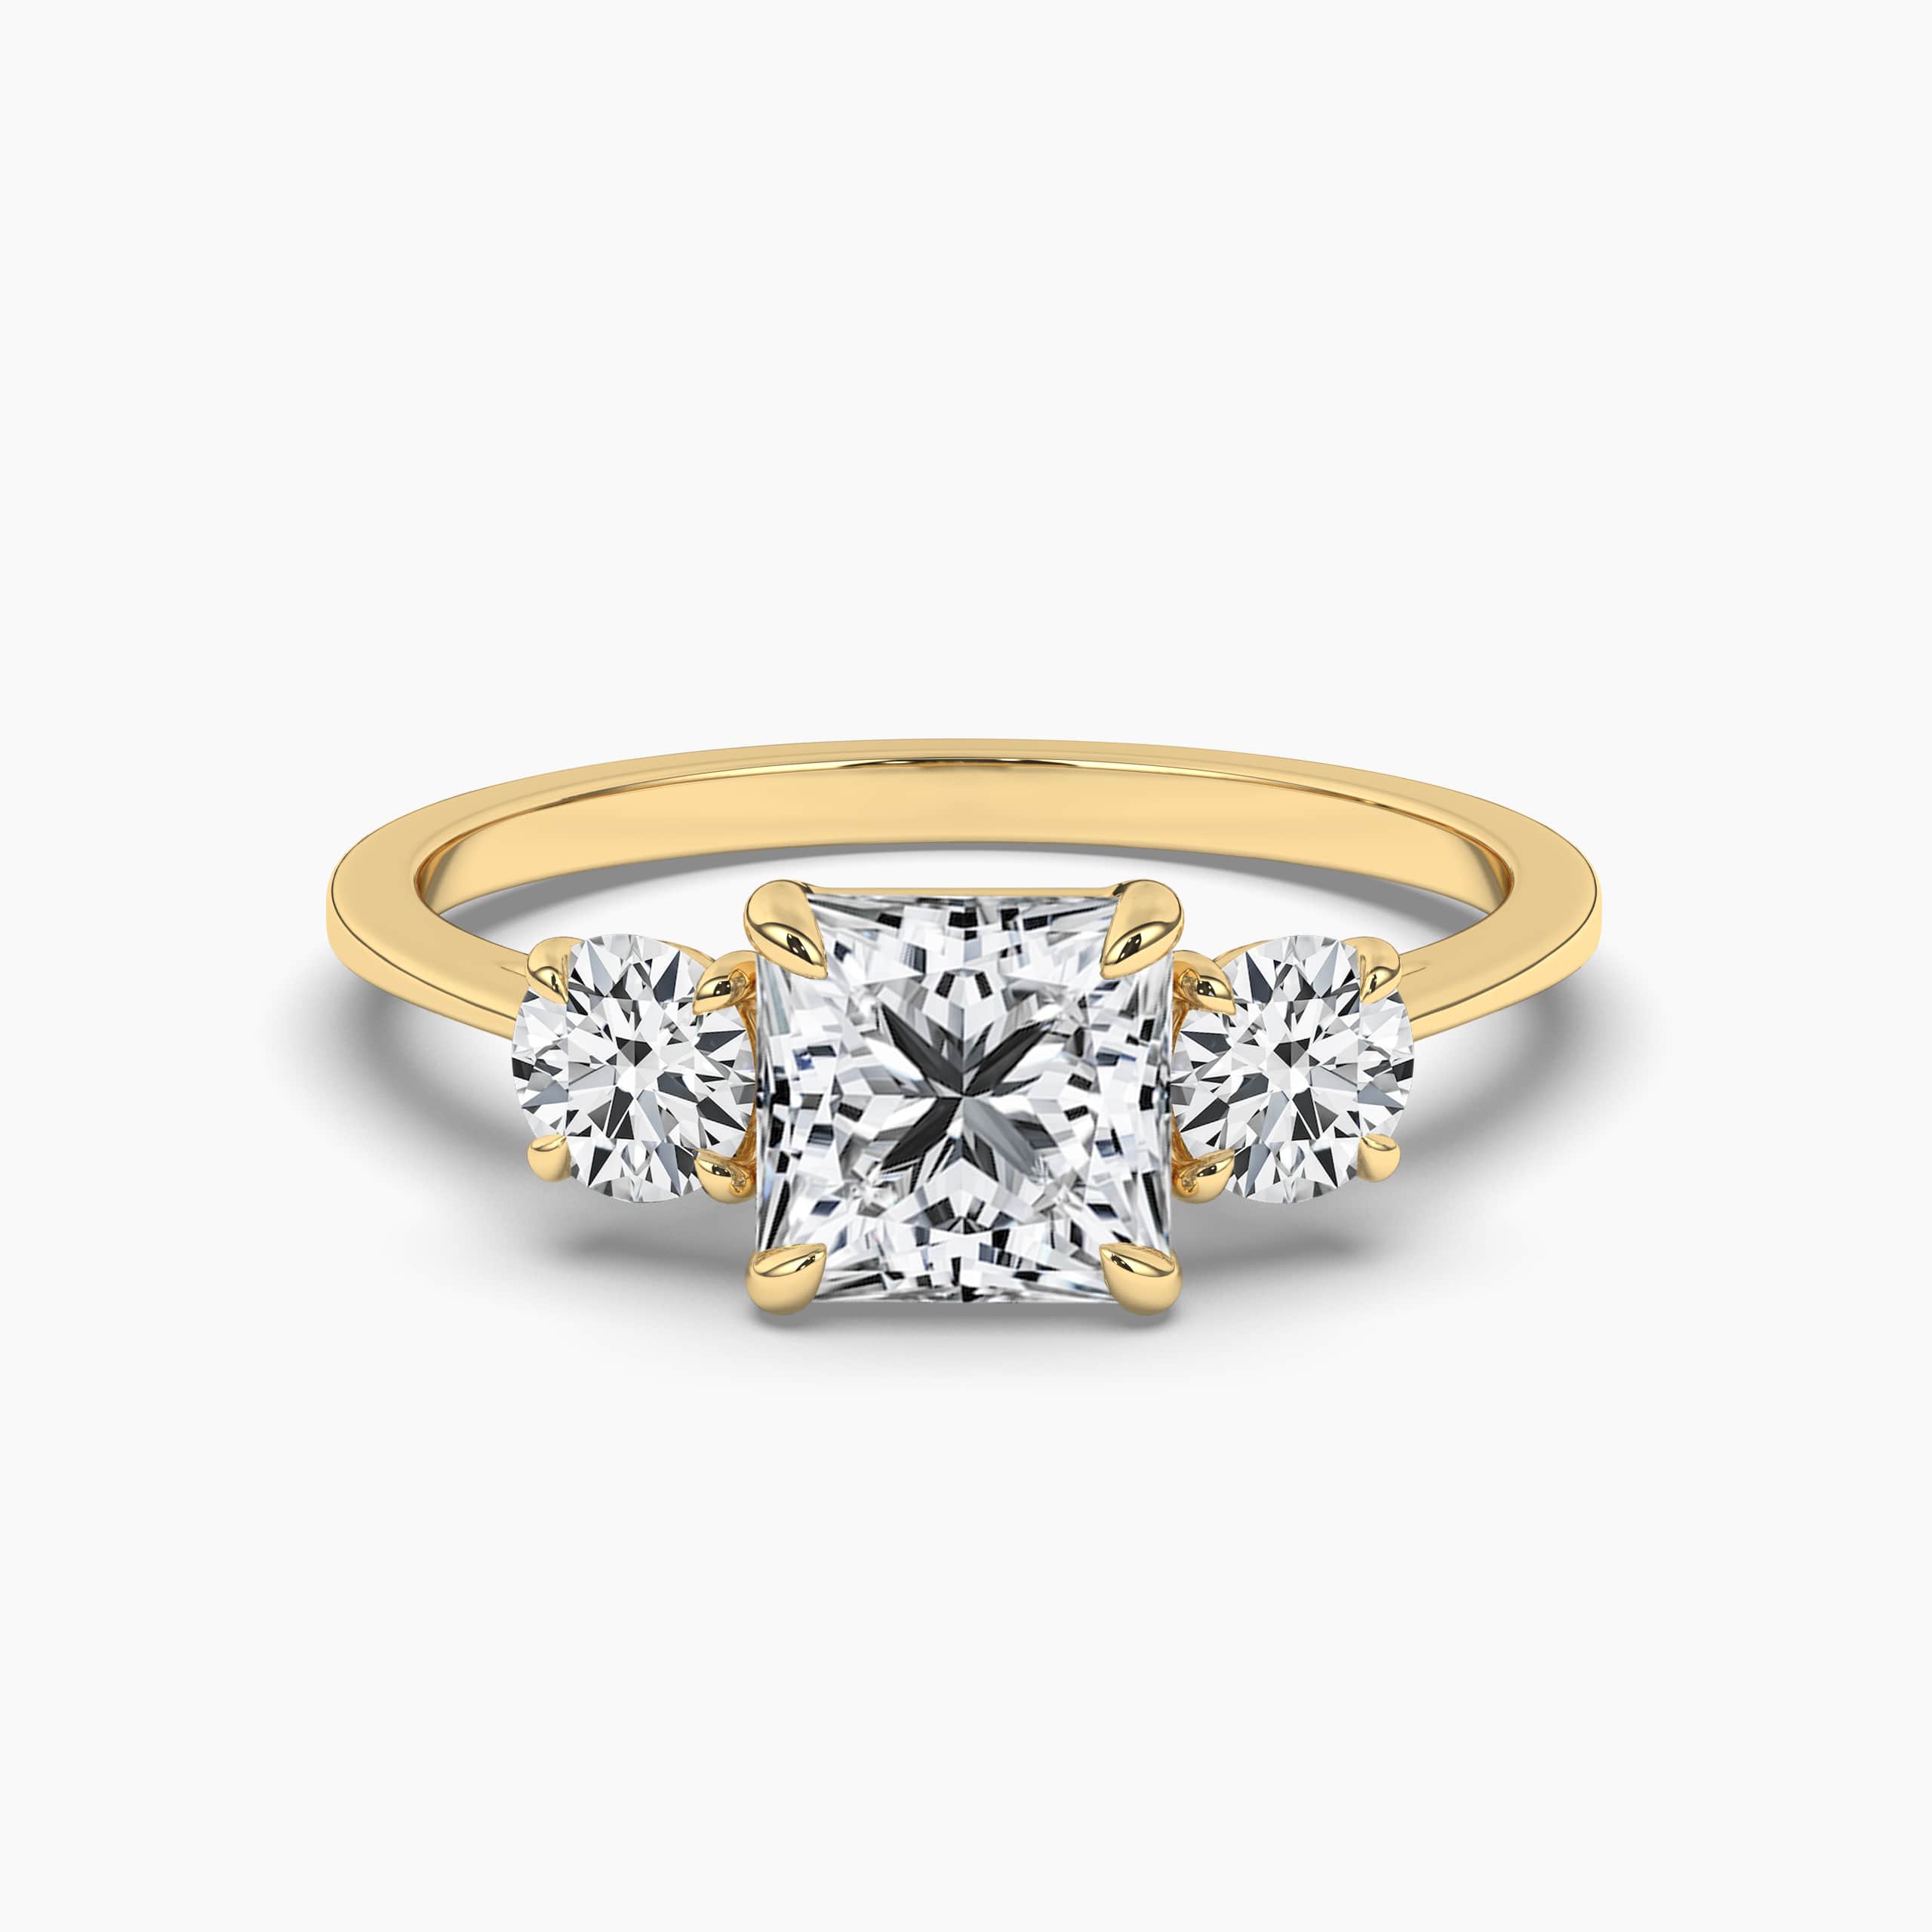  Princess Cut Diamond Engagement Ring  Yellow Gold